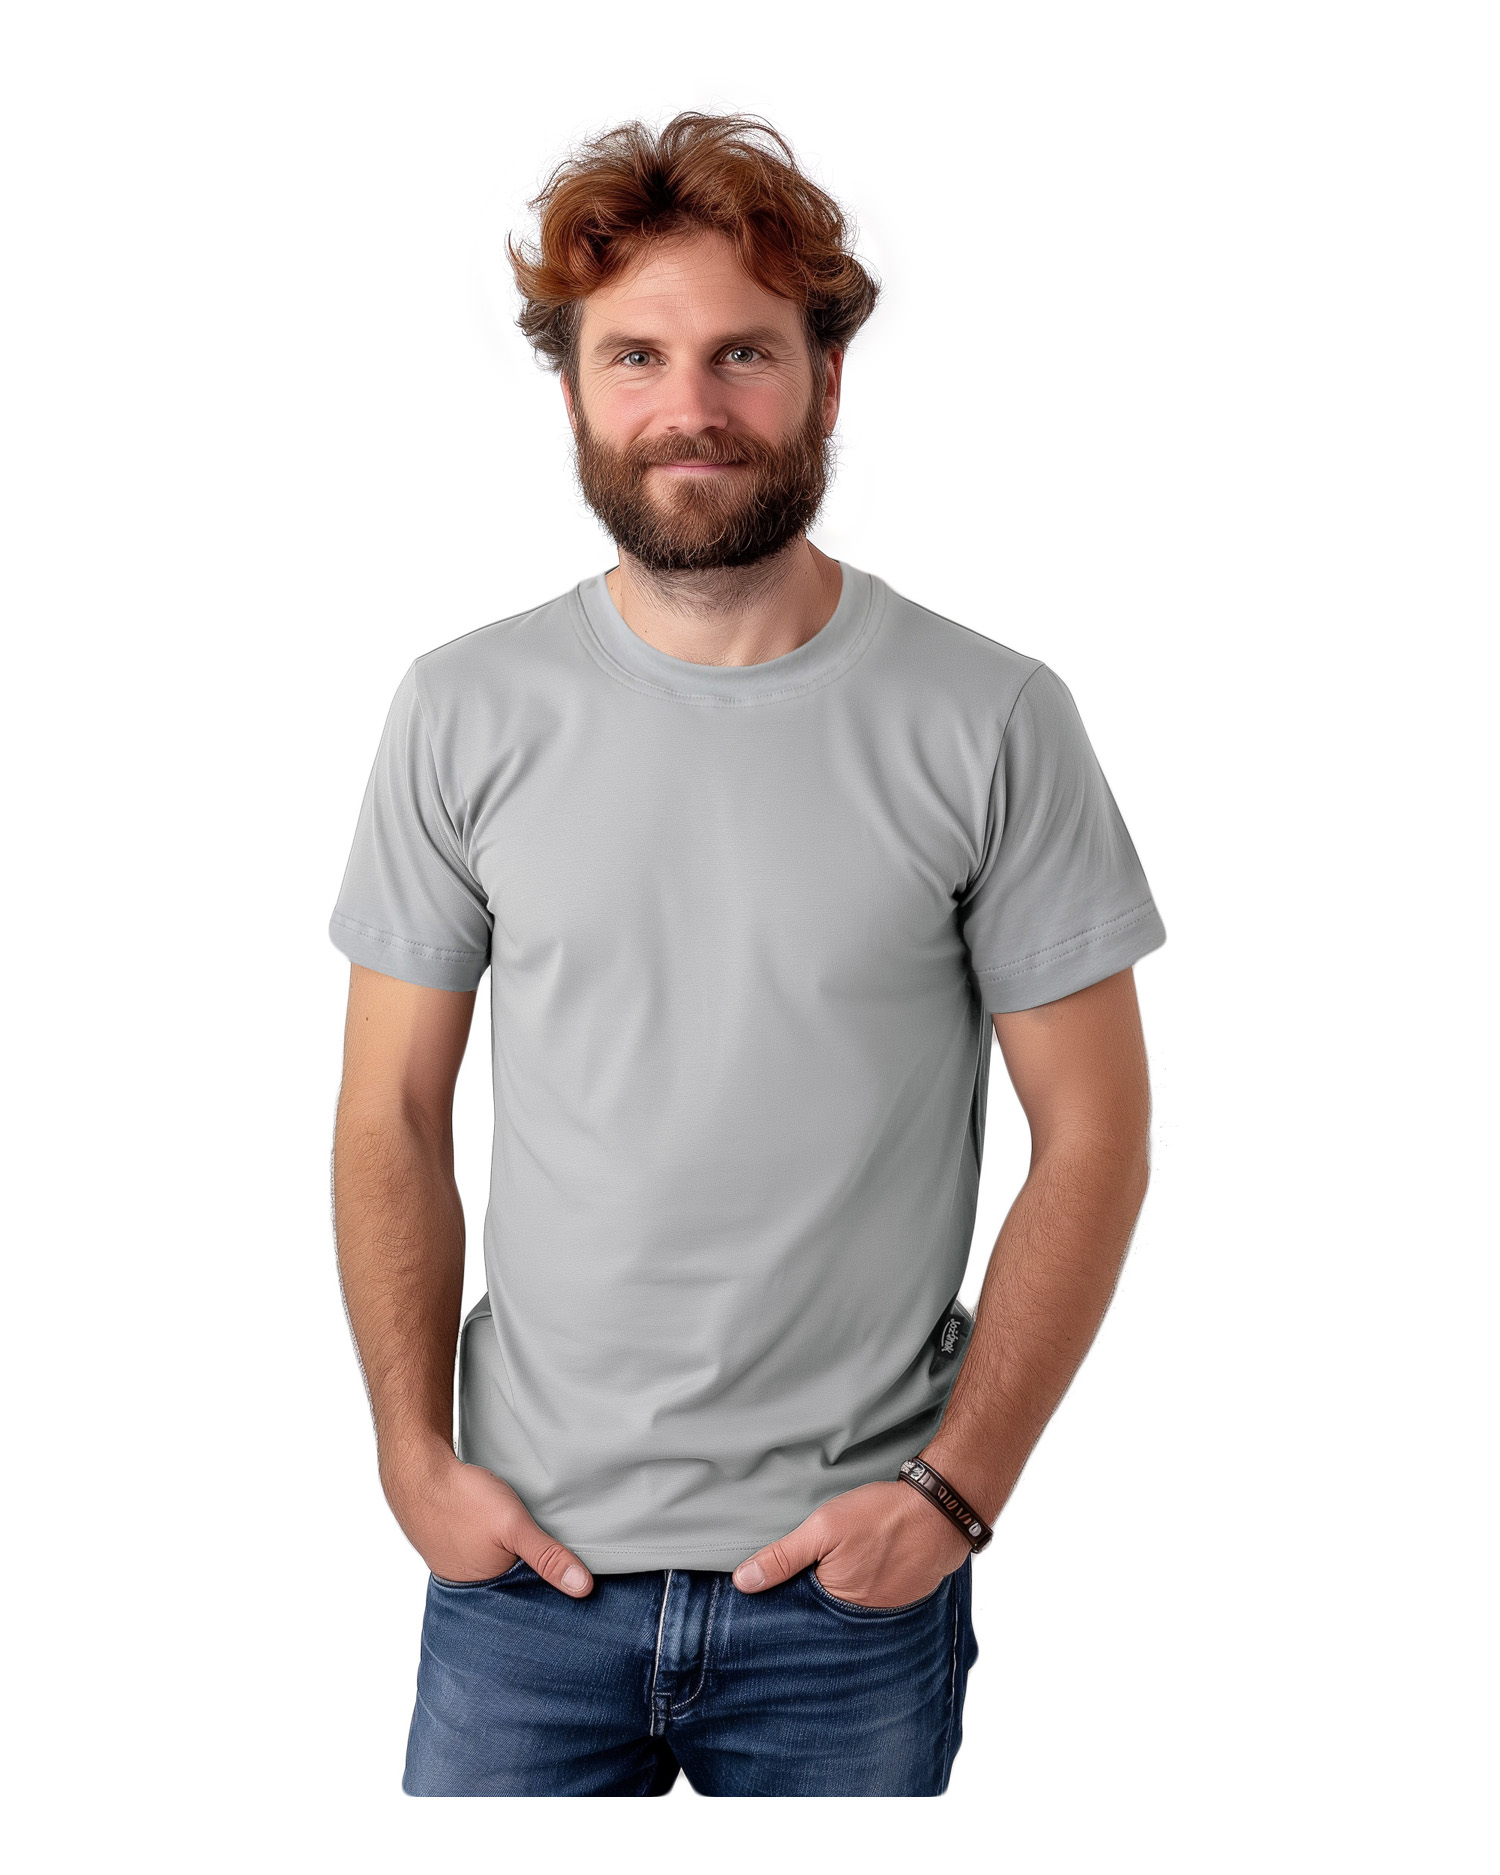 Men’s T-shirt Marek, short sleeve, olive